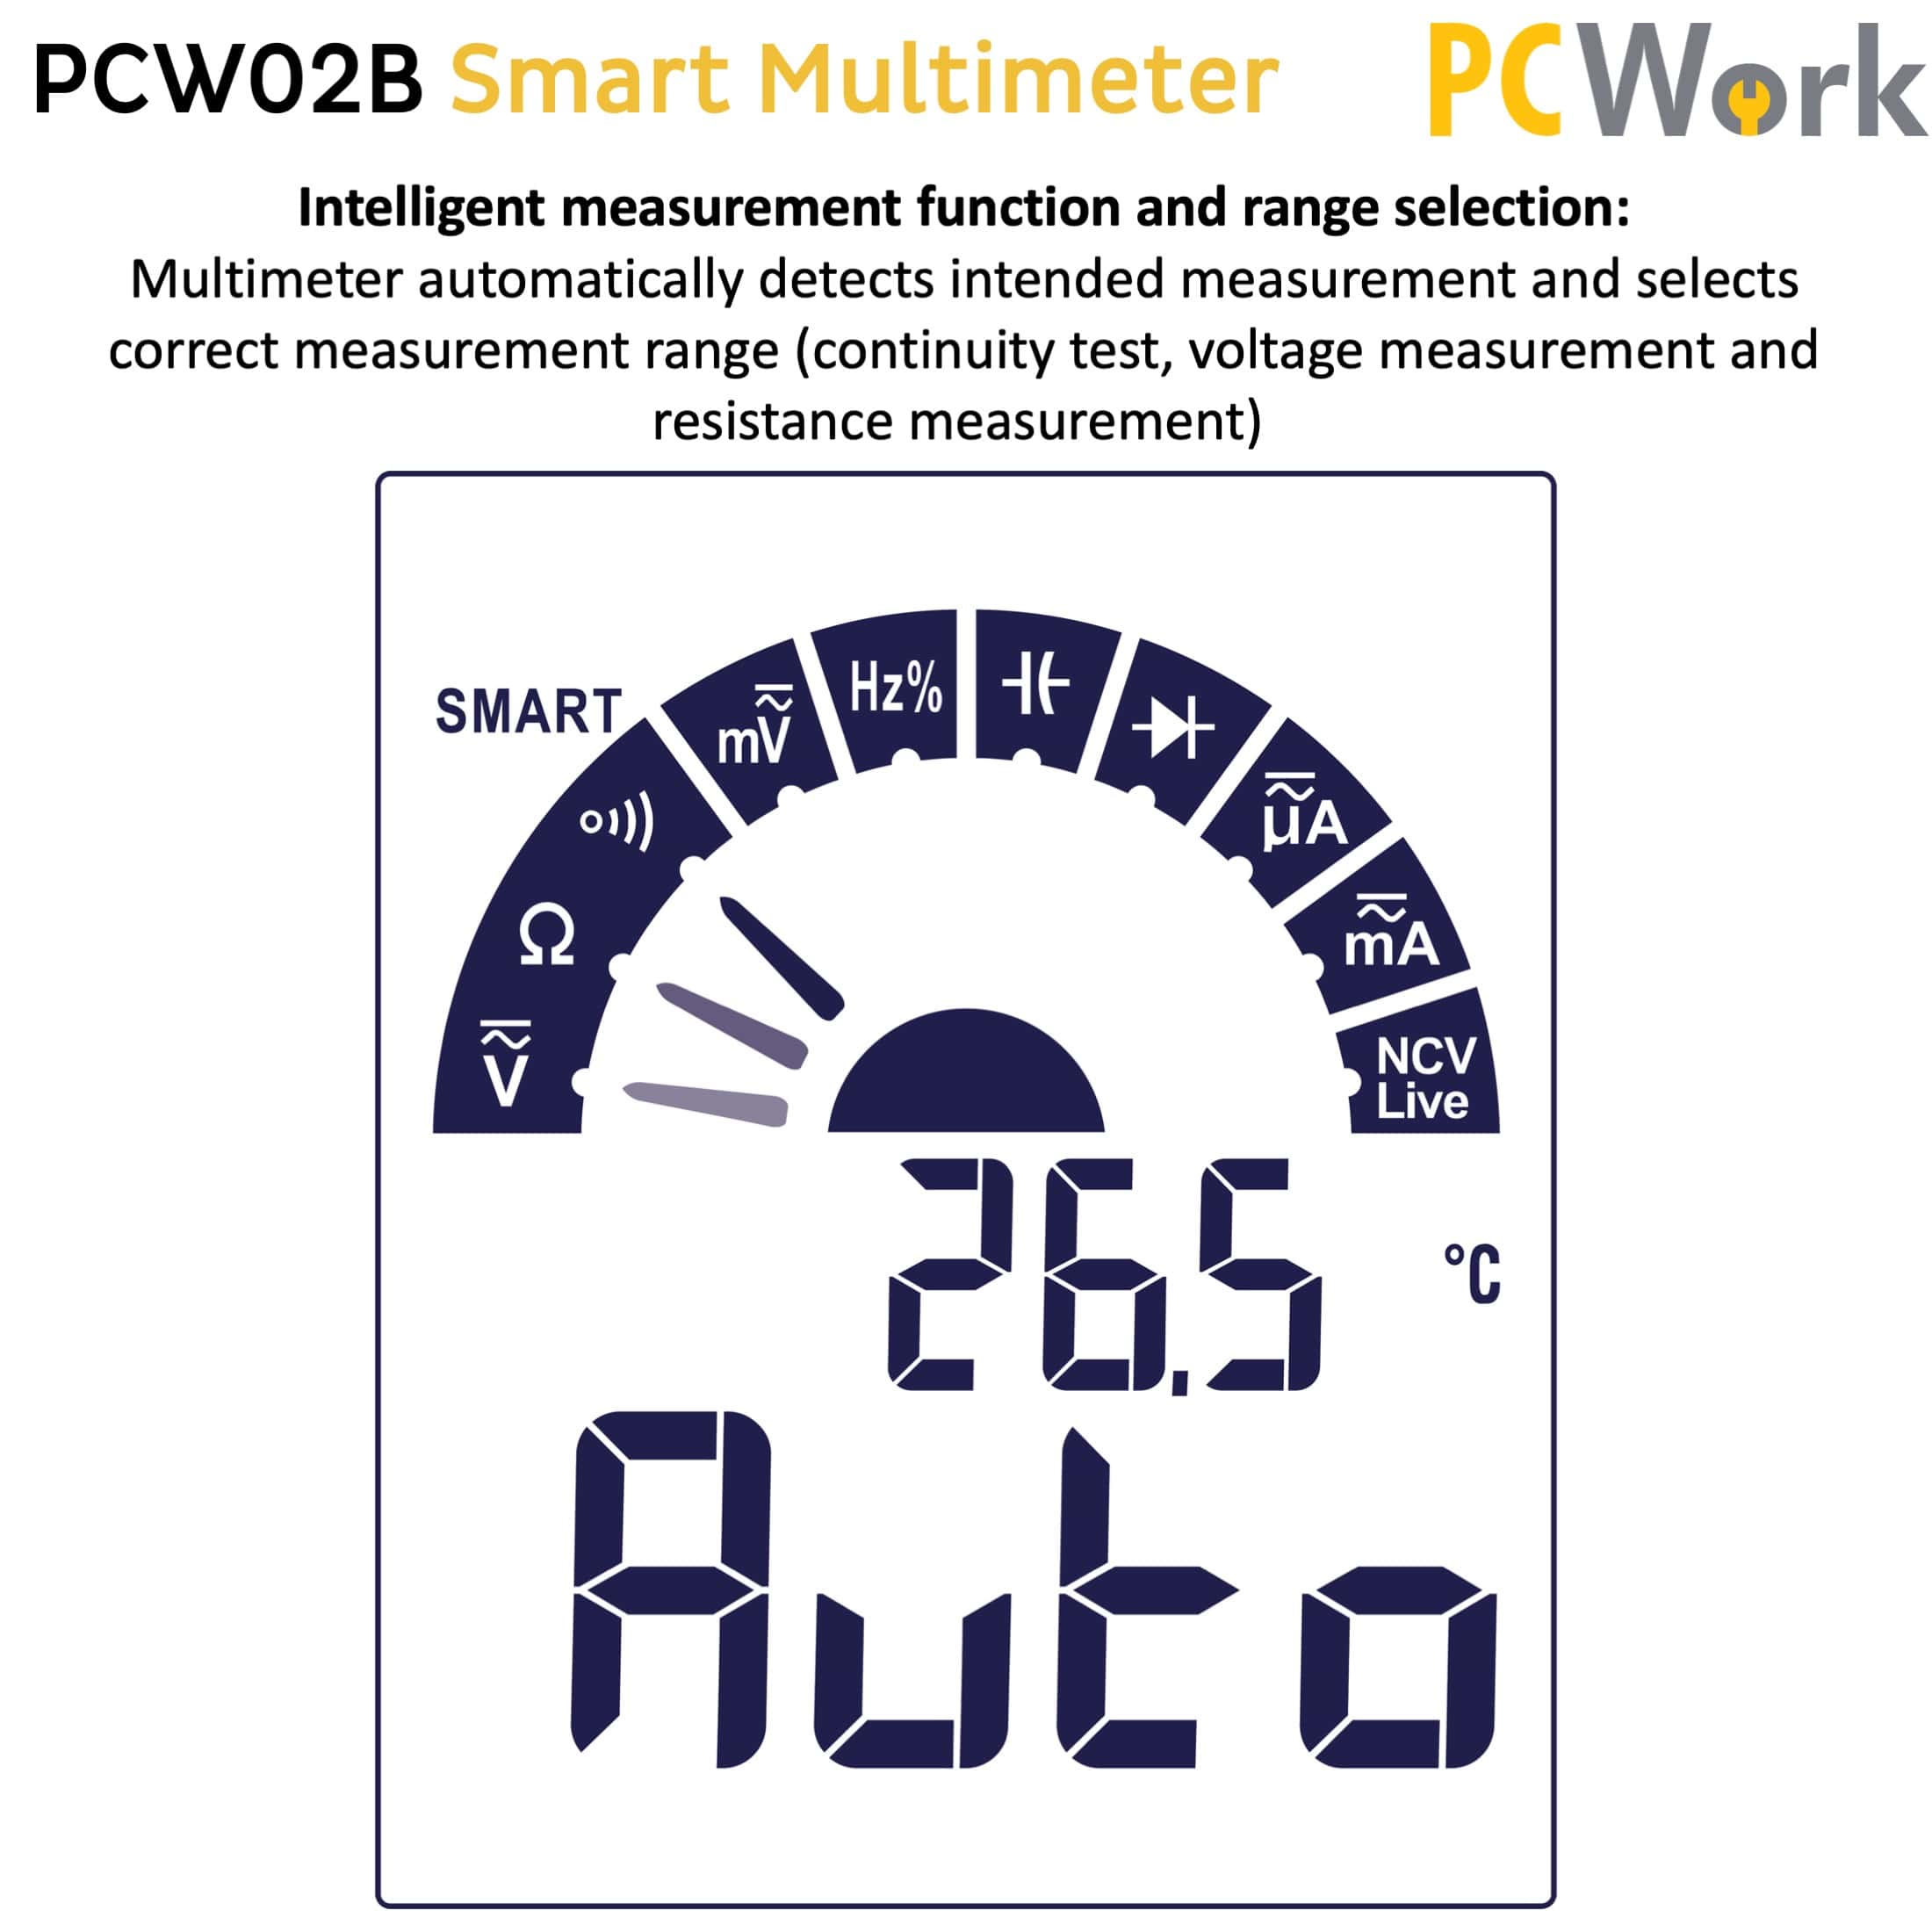 PCW02B Digital Multimeter, digital, smart, True RMS